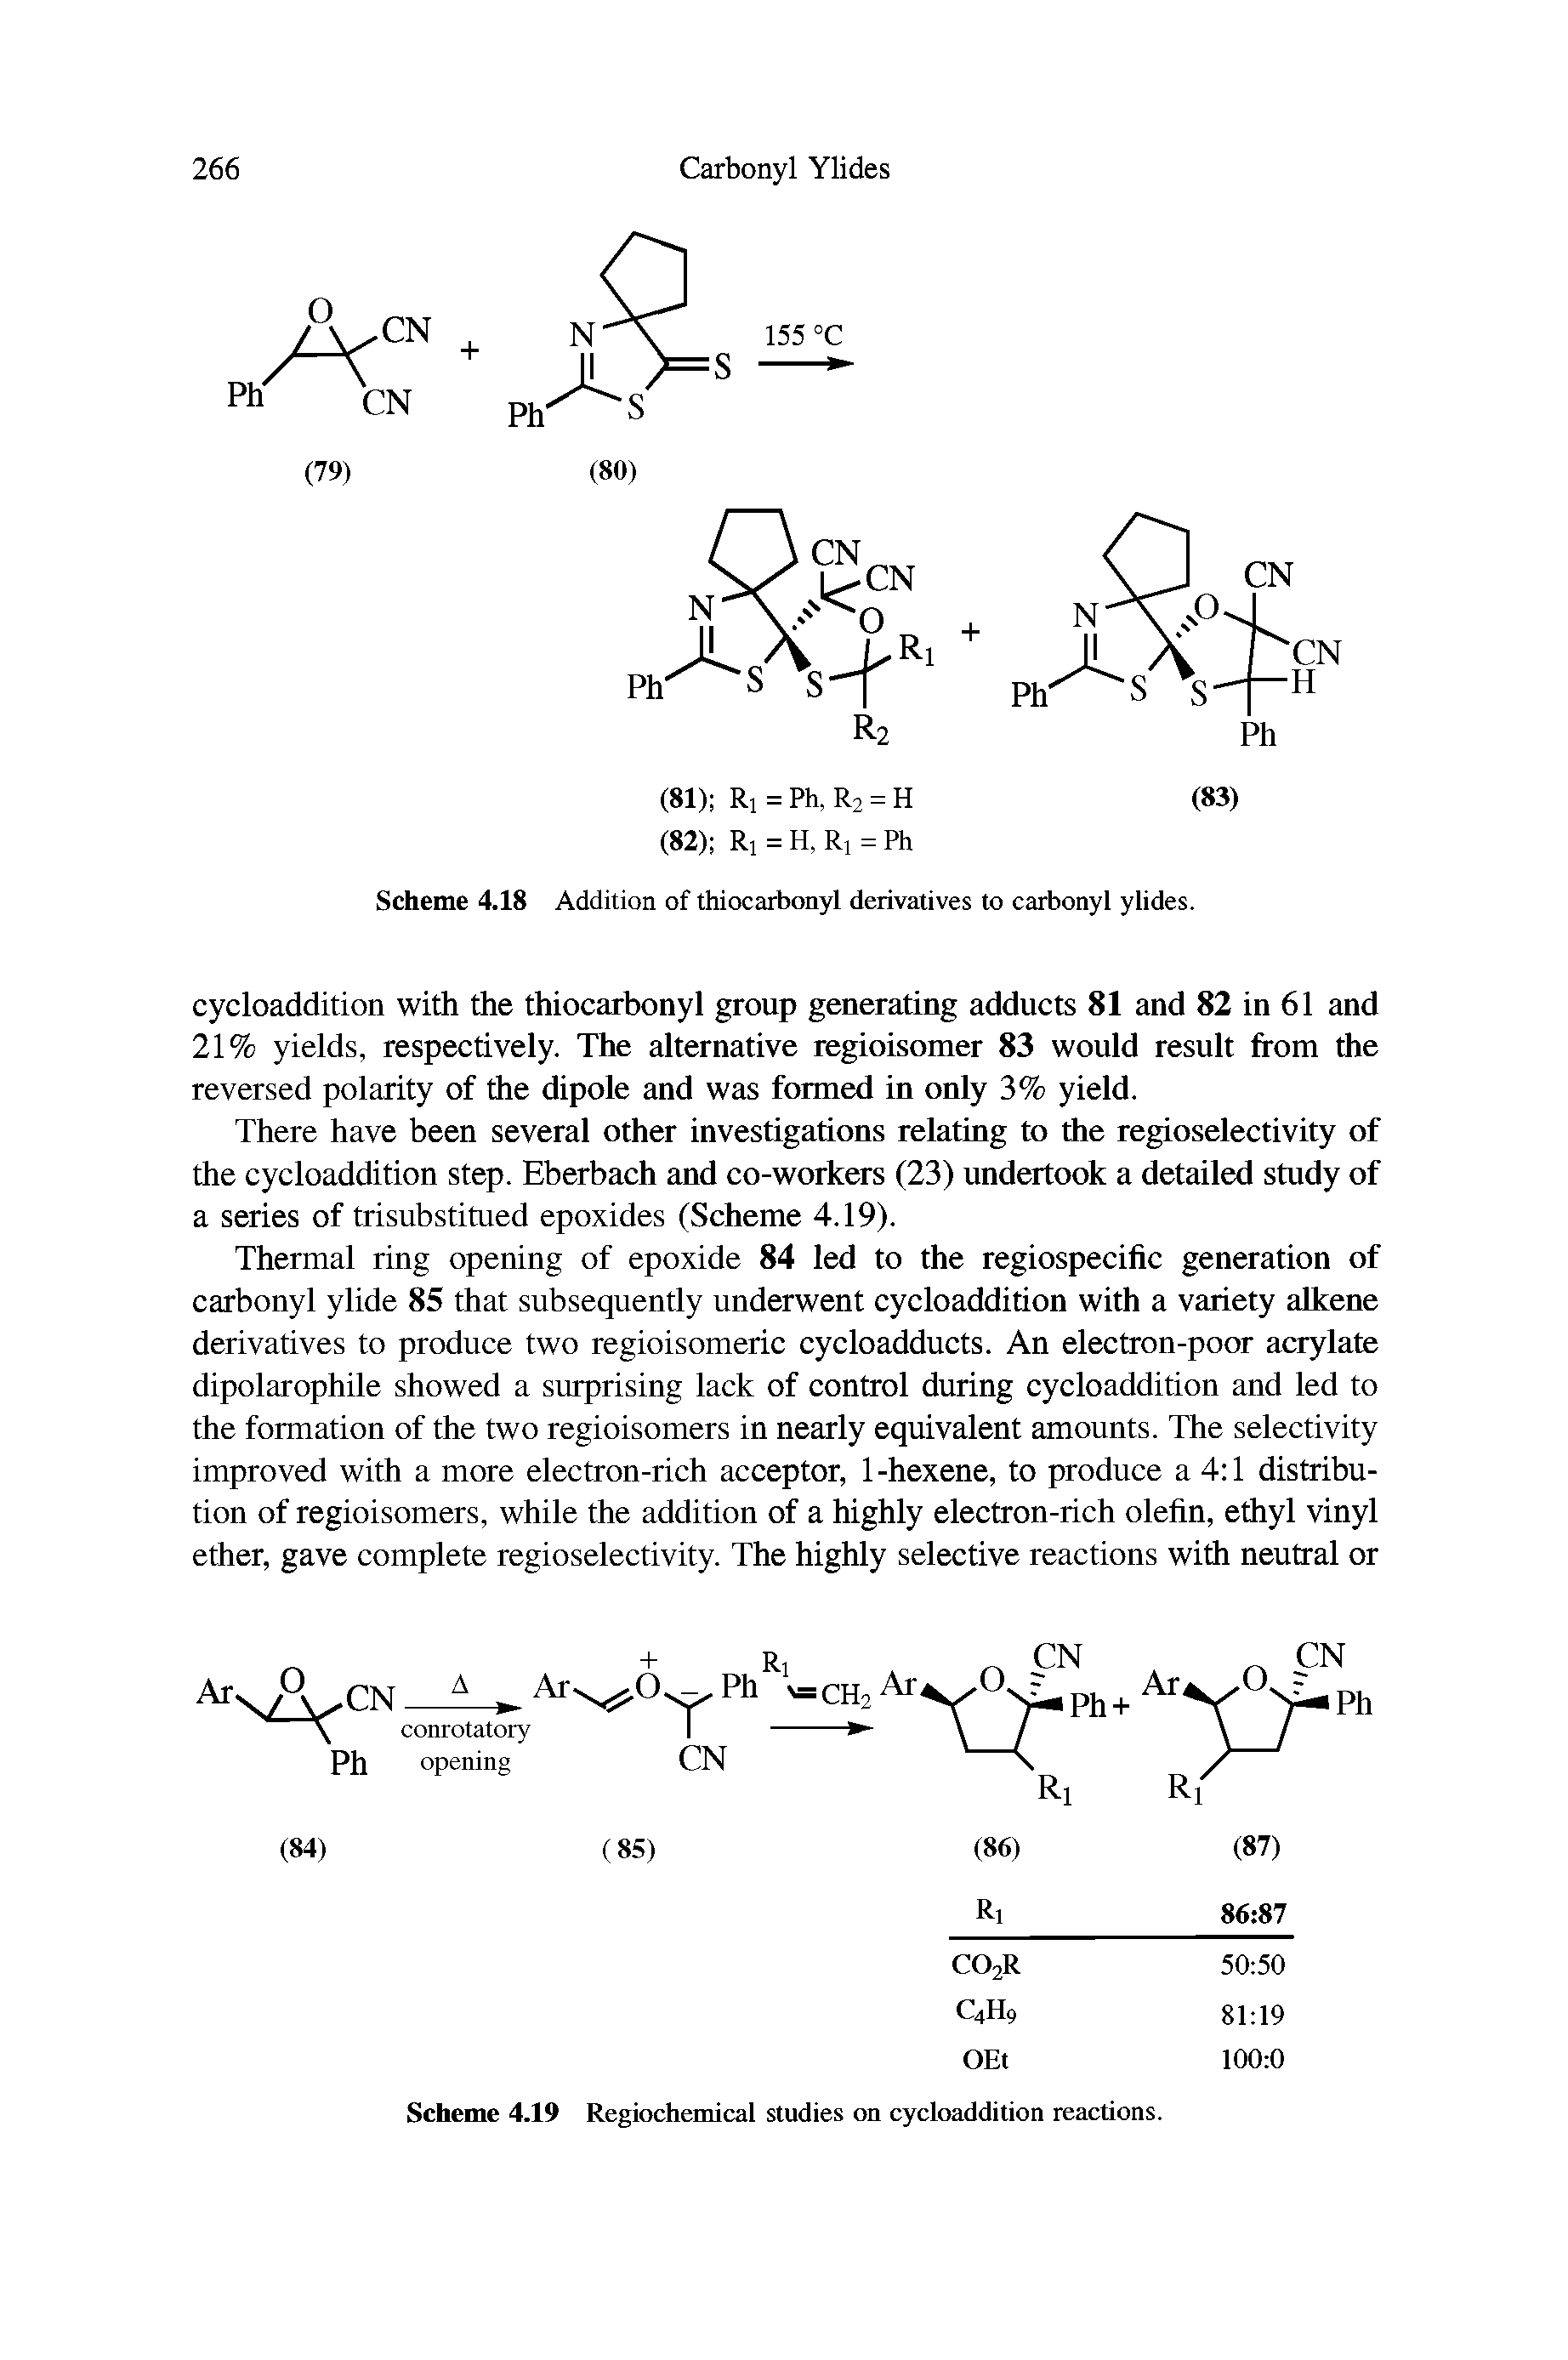 Scheme 4.18 Addition of thiocarbonyl derivatives to carbonyl ylides.